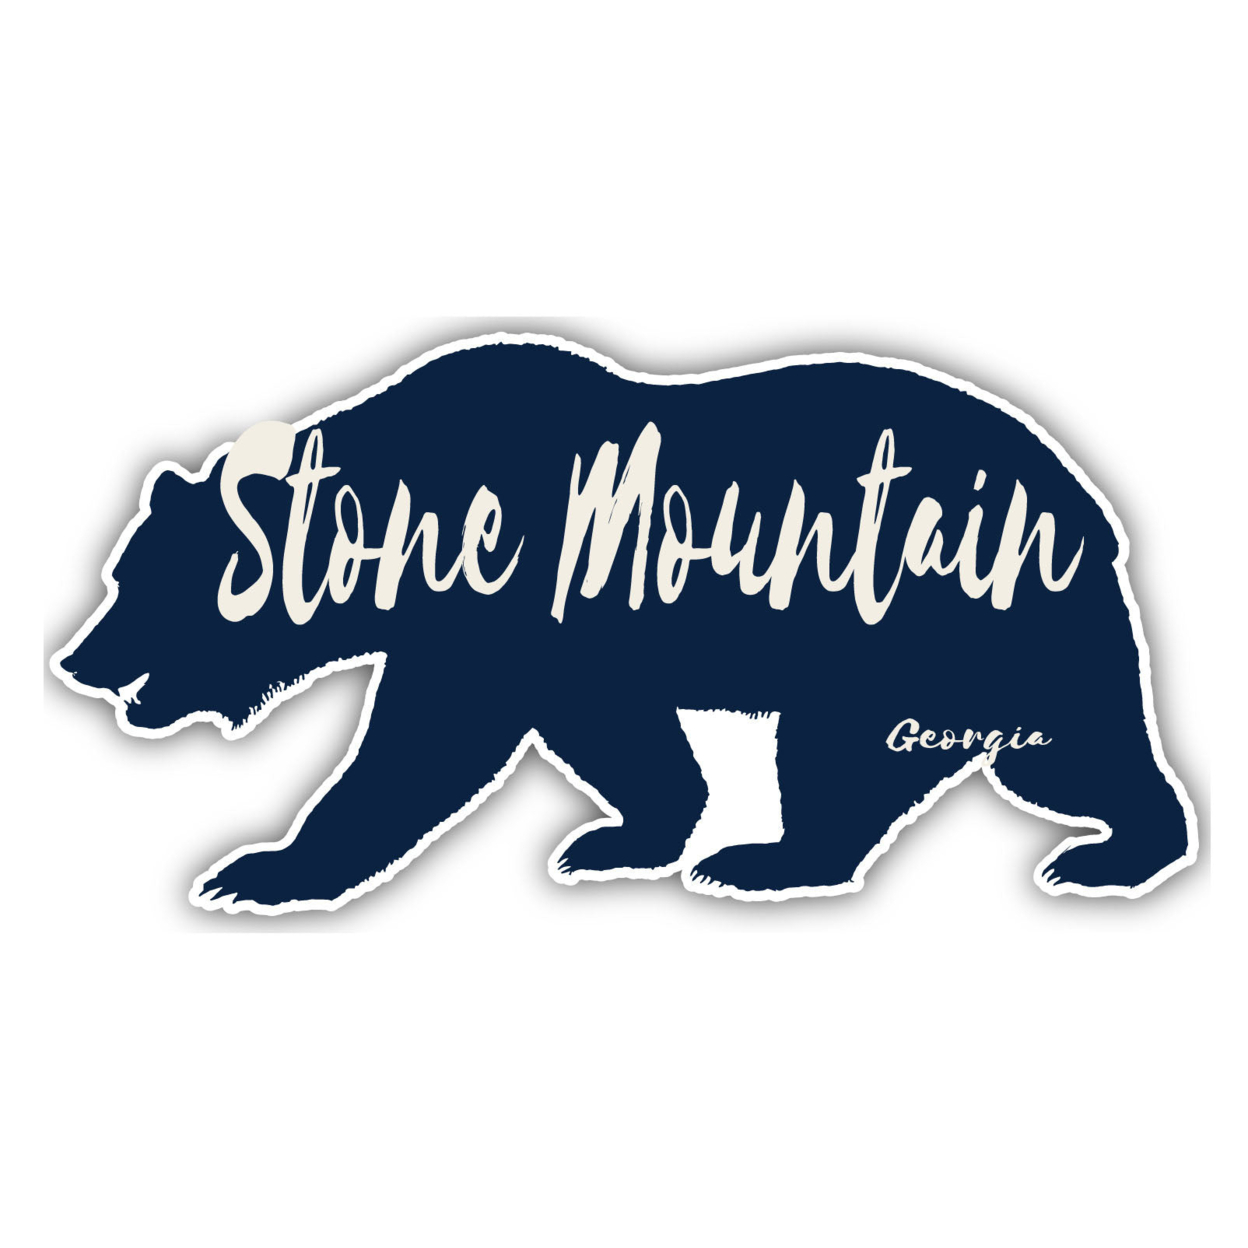 Stone Mountain Georgia Souvenir Decorative Stickers (Choose Theme And Size) - Single Unit, 4-Inch, Camp Life